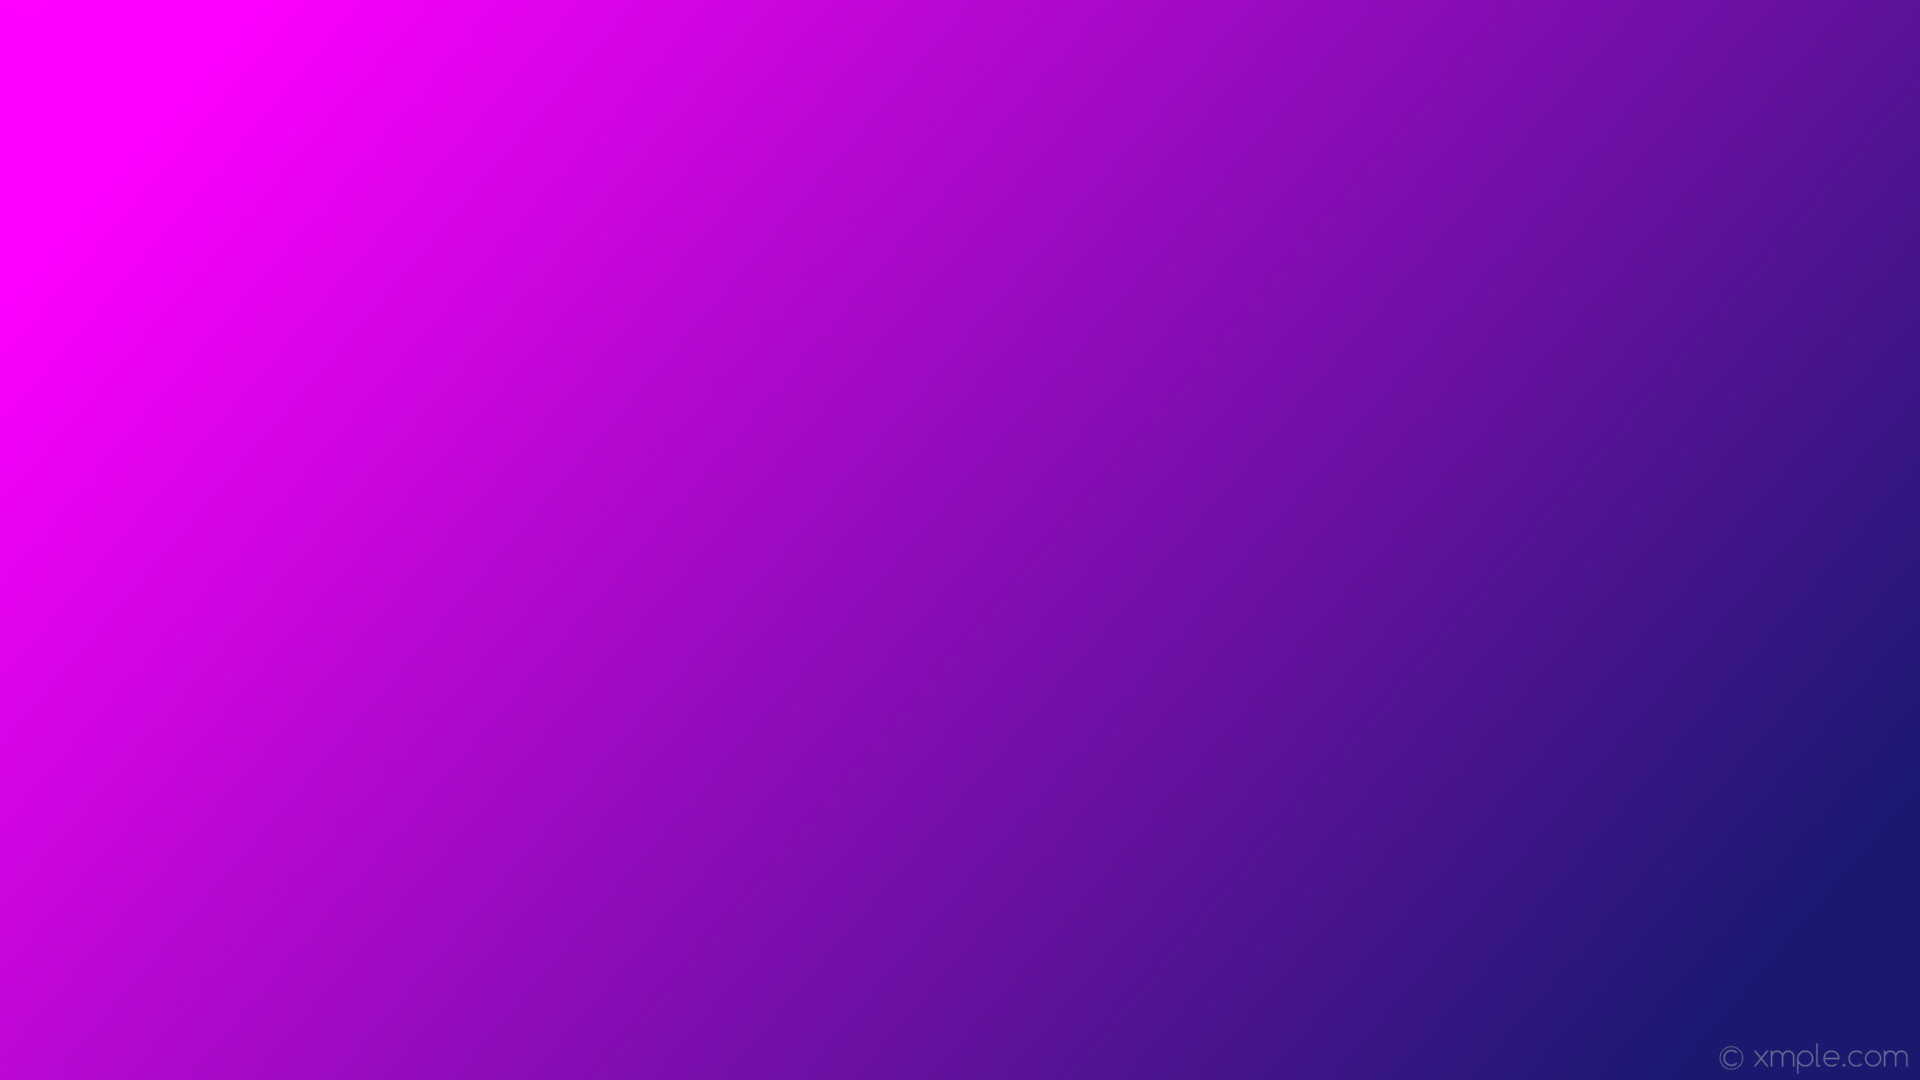 HD Pink, Blue, Green, Purple Gradient Background / Wallpaper